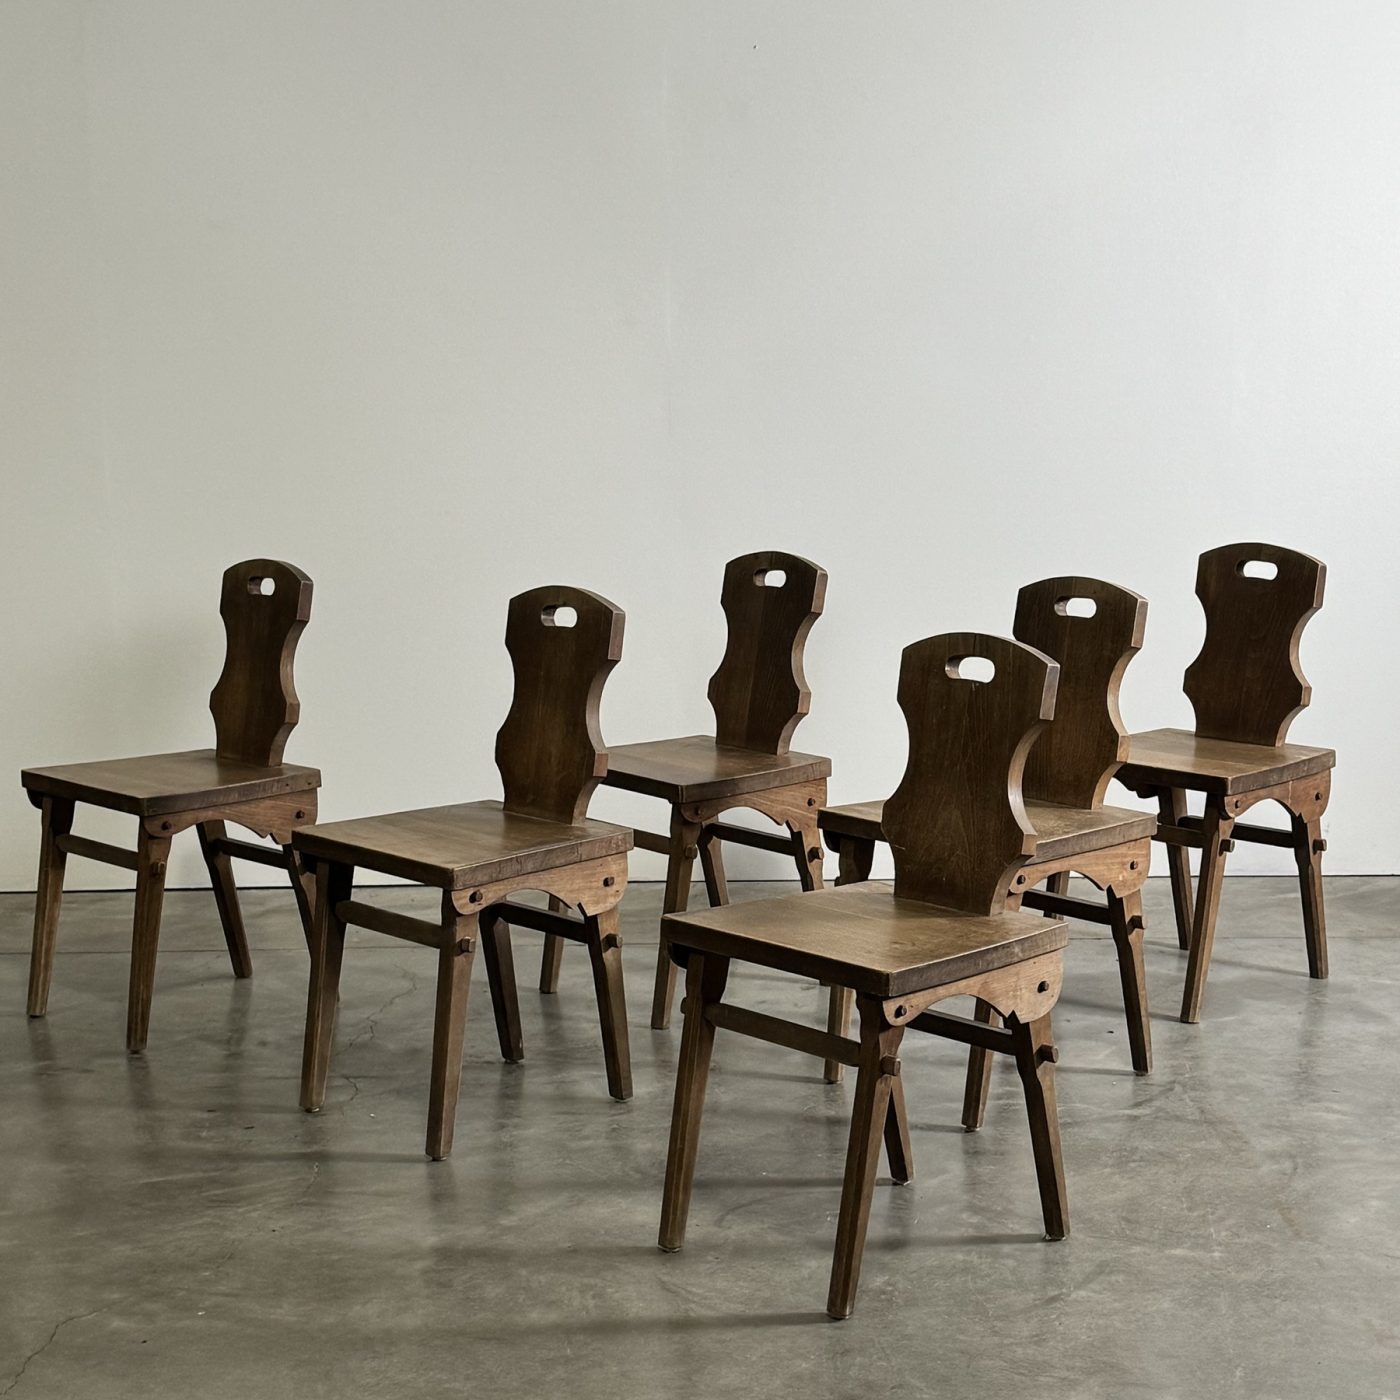 objet-vagabond-rustic-chairs0002